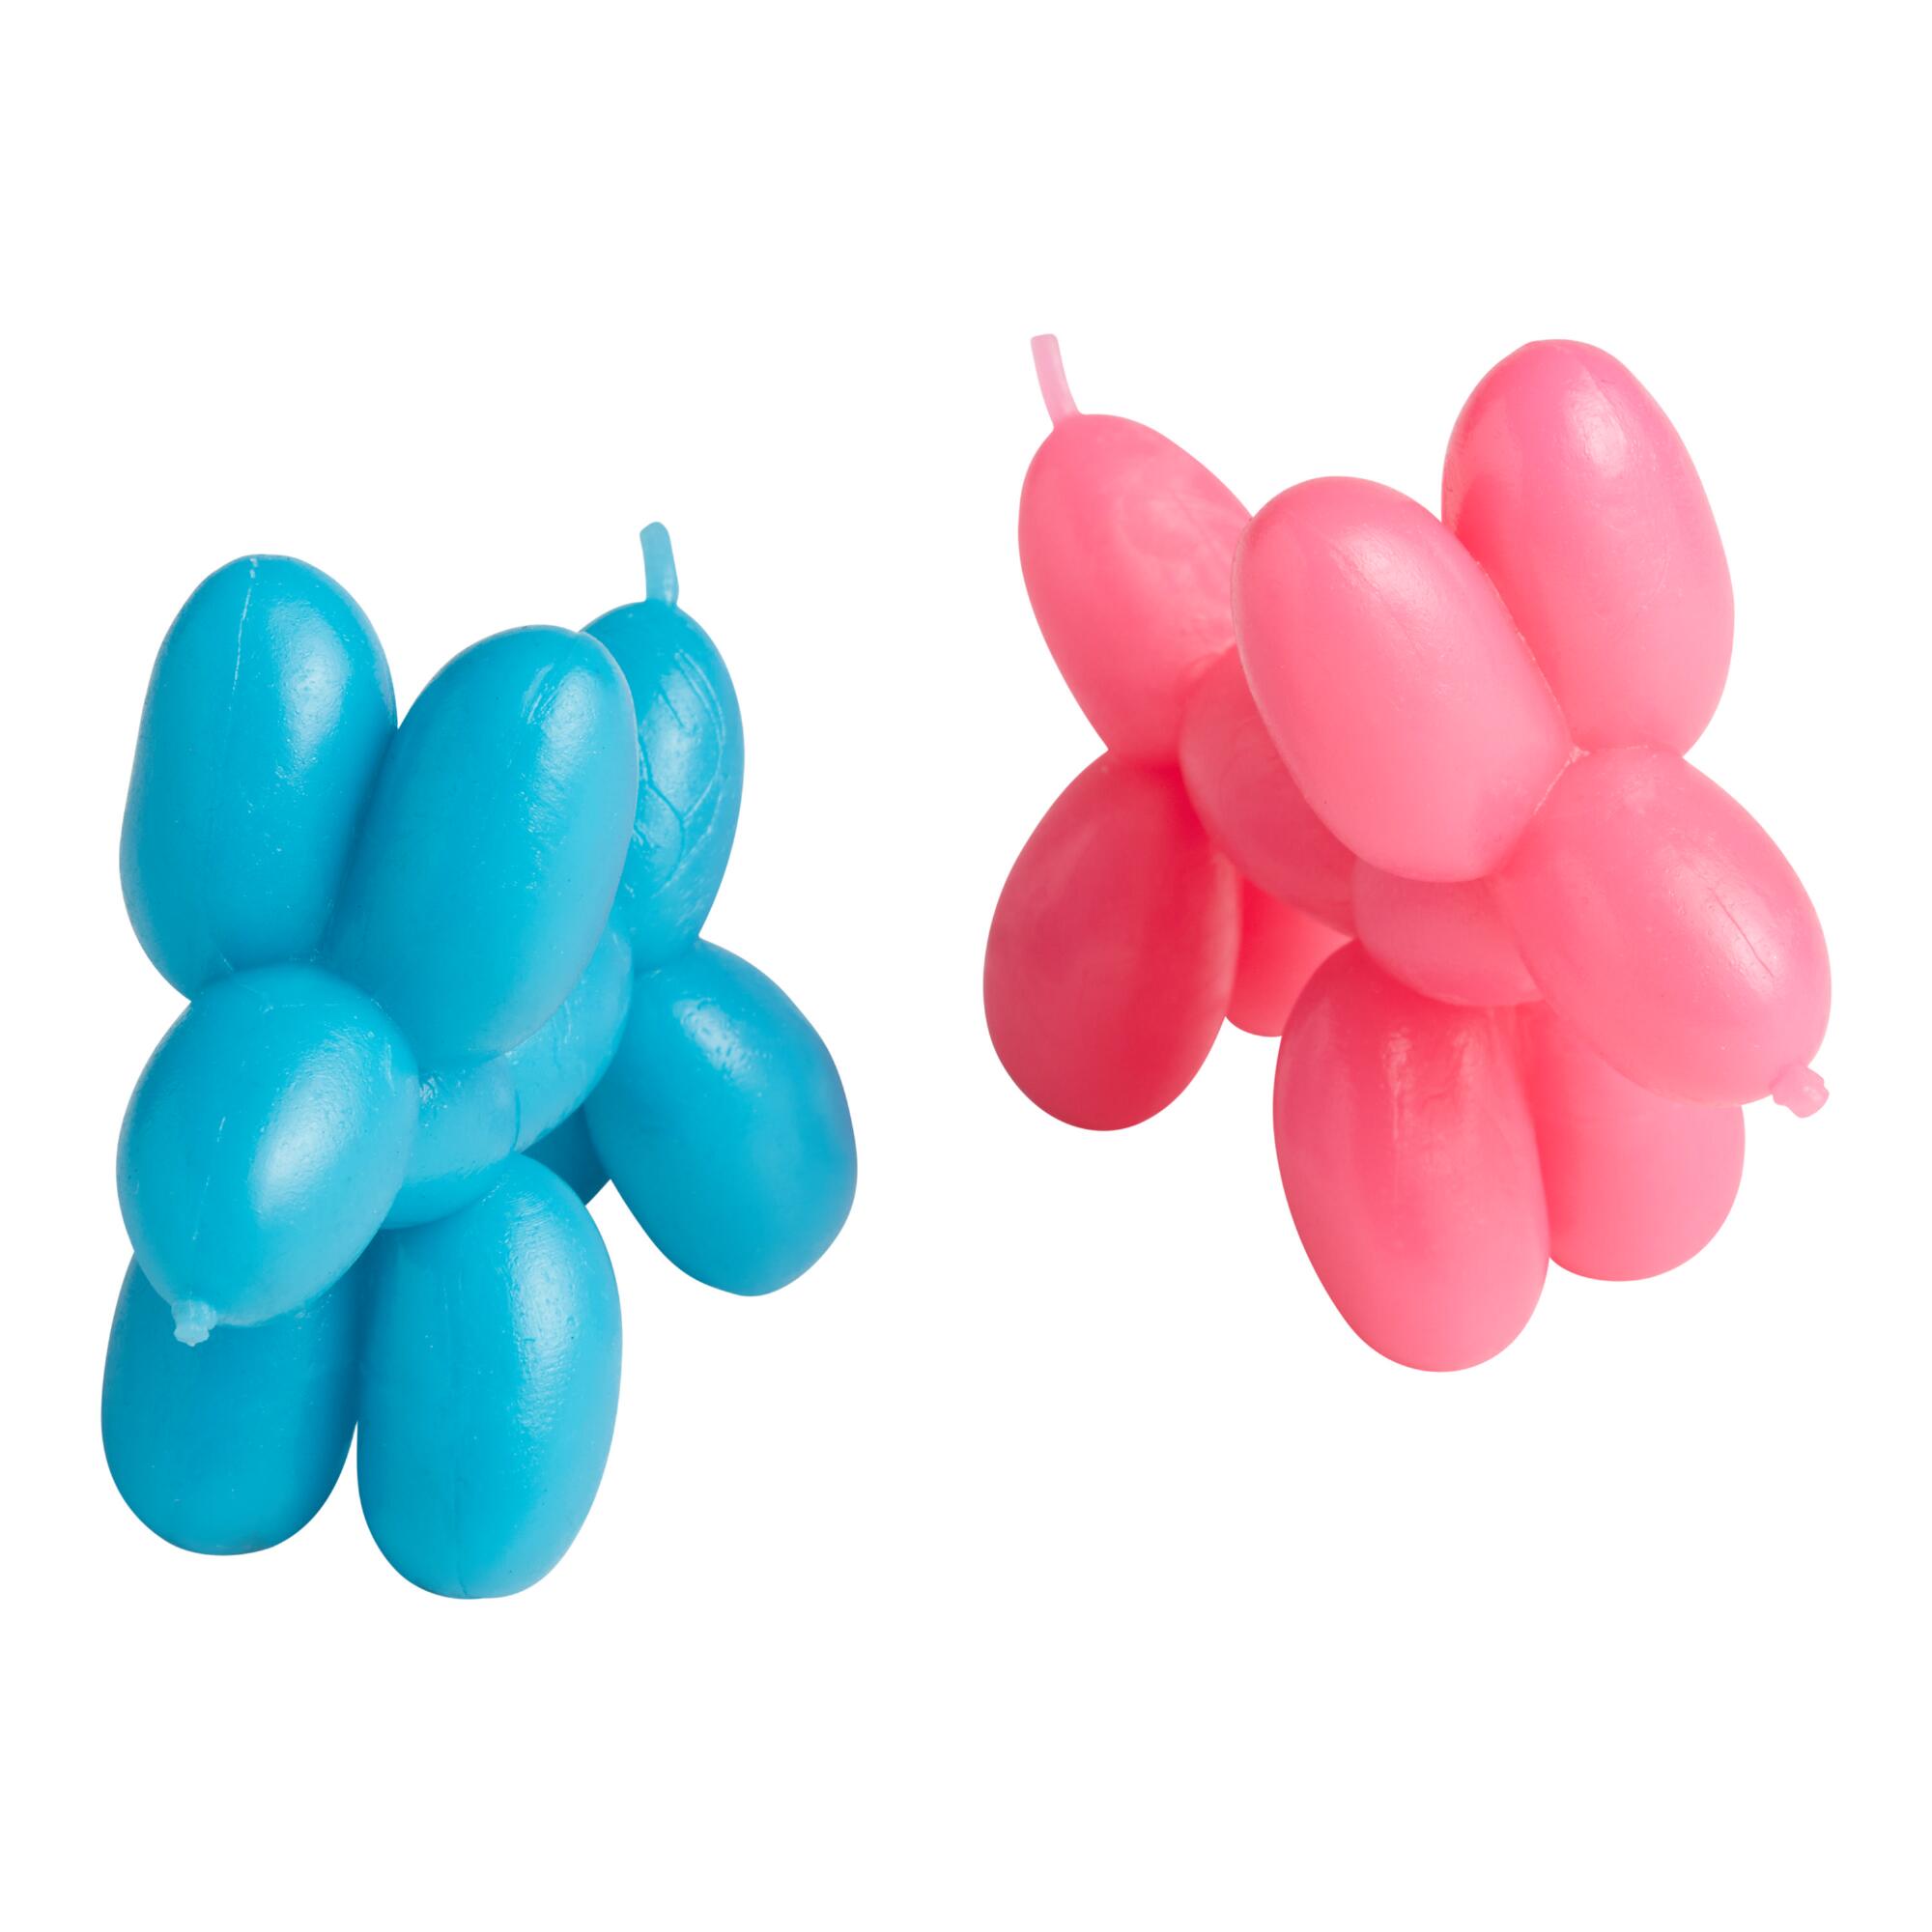 Toysmith Balloon Dog Toys Set of 2: Blue/Pink - Plastic by World Market